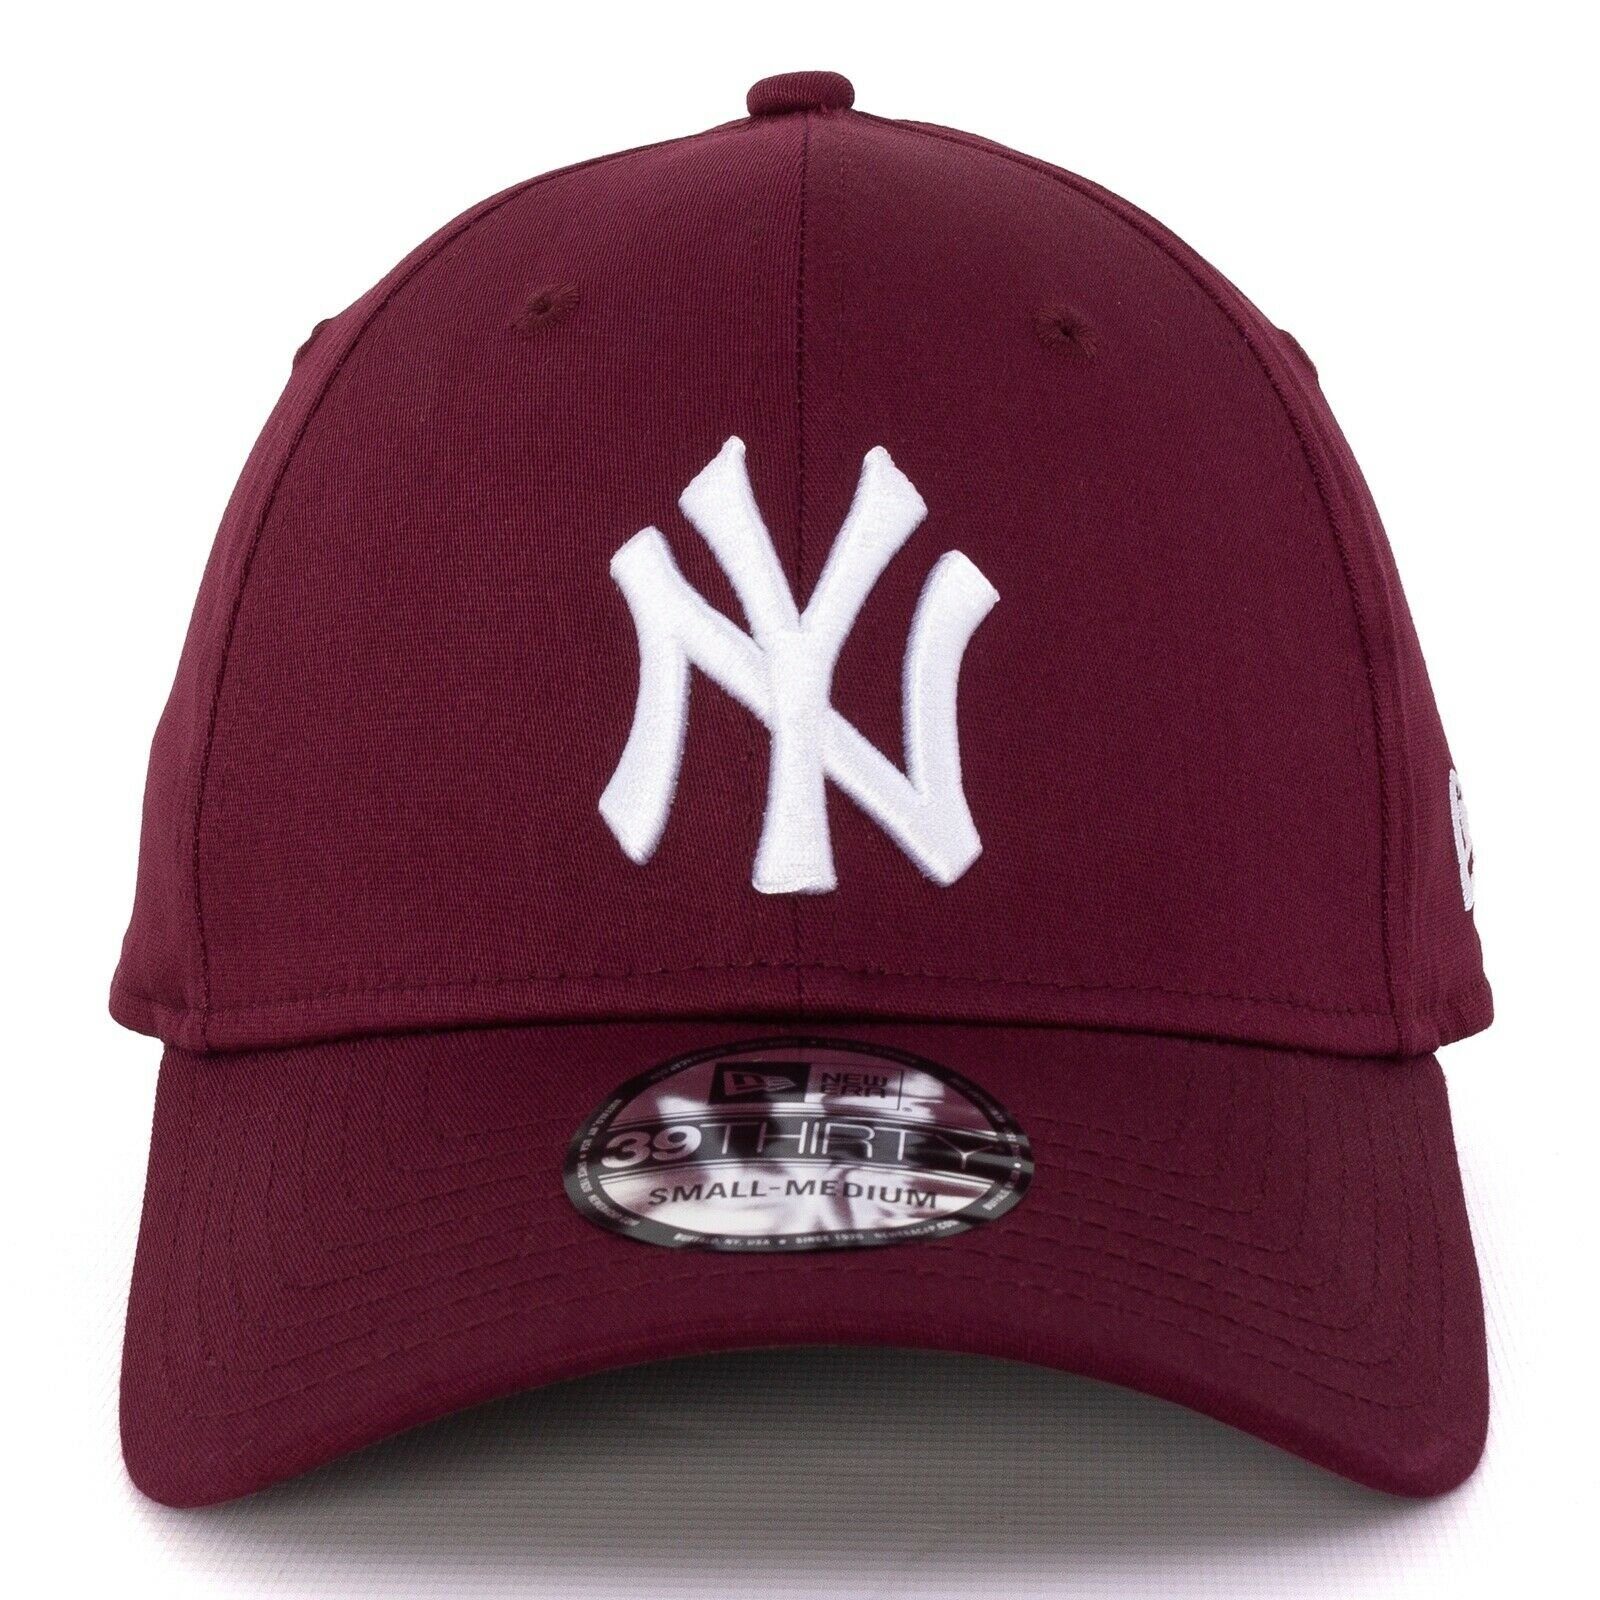 New Cap New Baseball Cap New York Era Era Yankees (1-St) 39Thirty